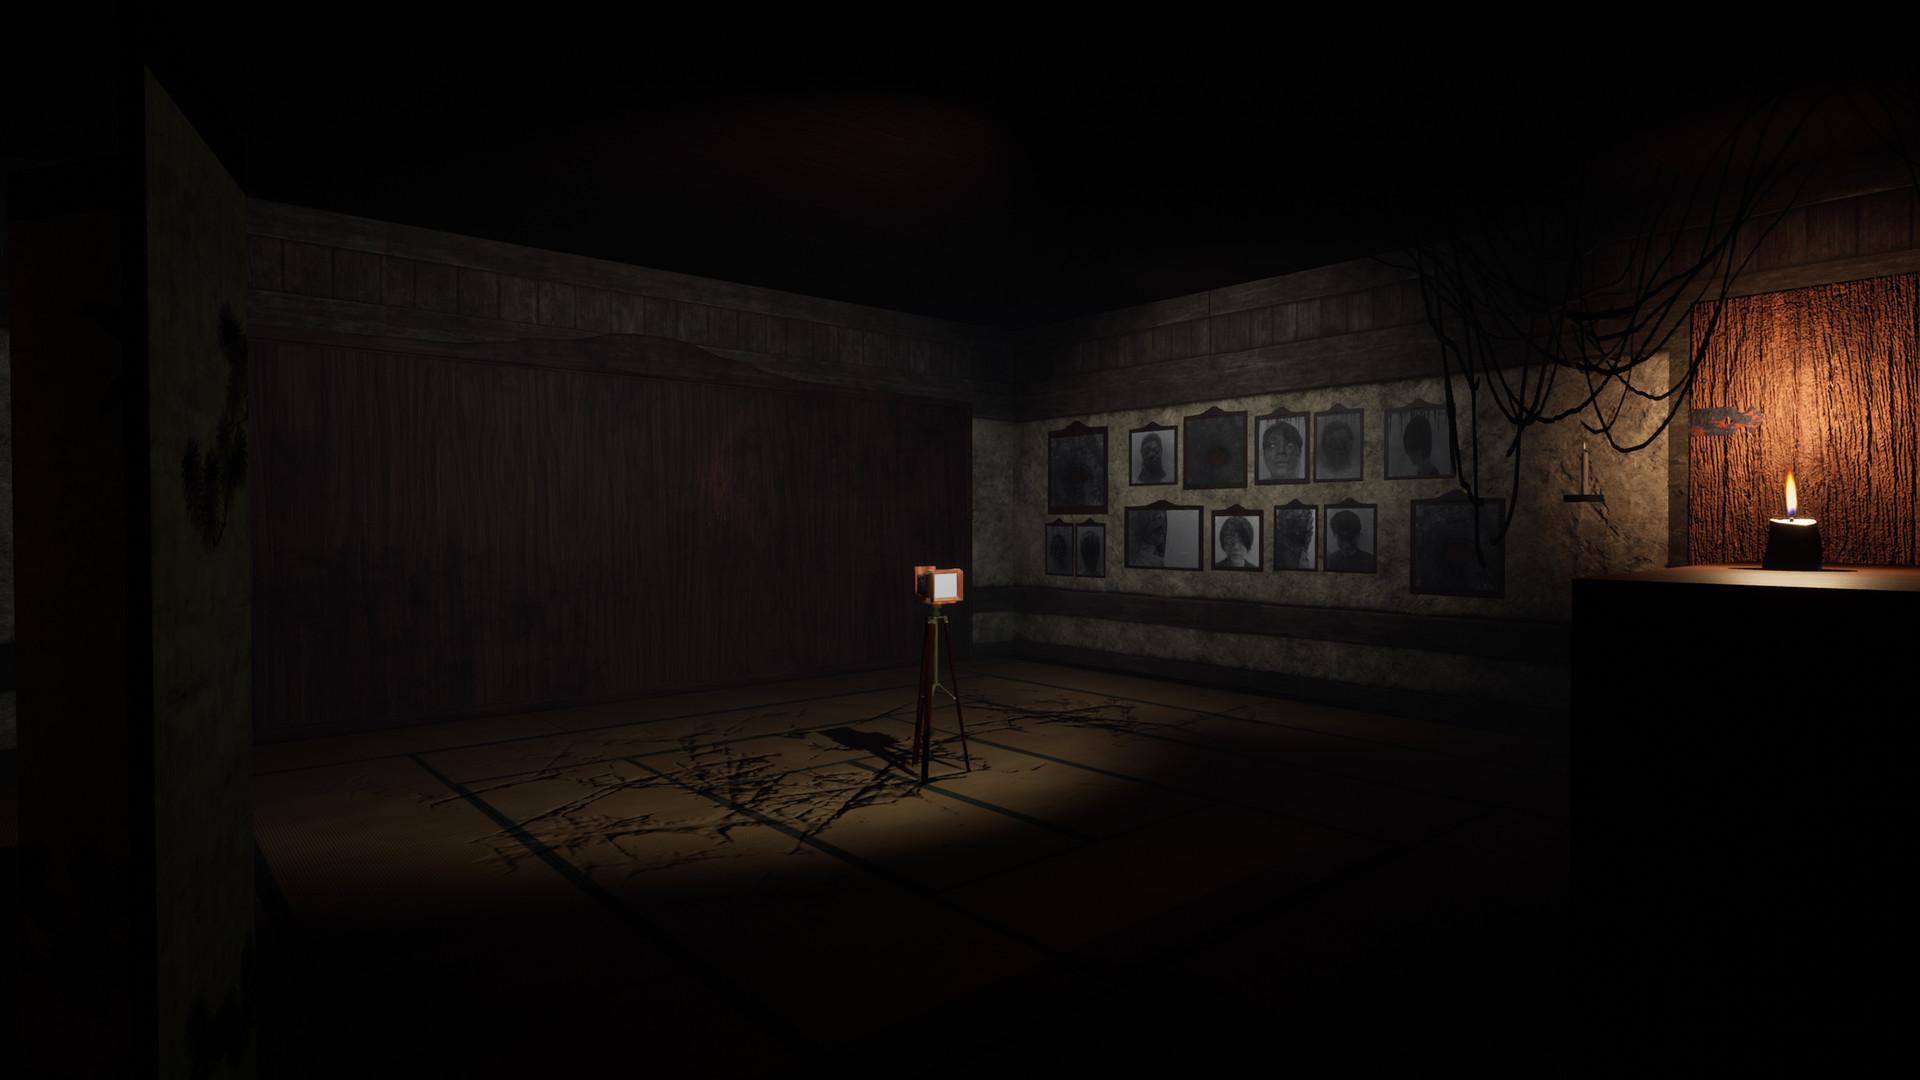 Screenshot №14 from game Malice